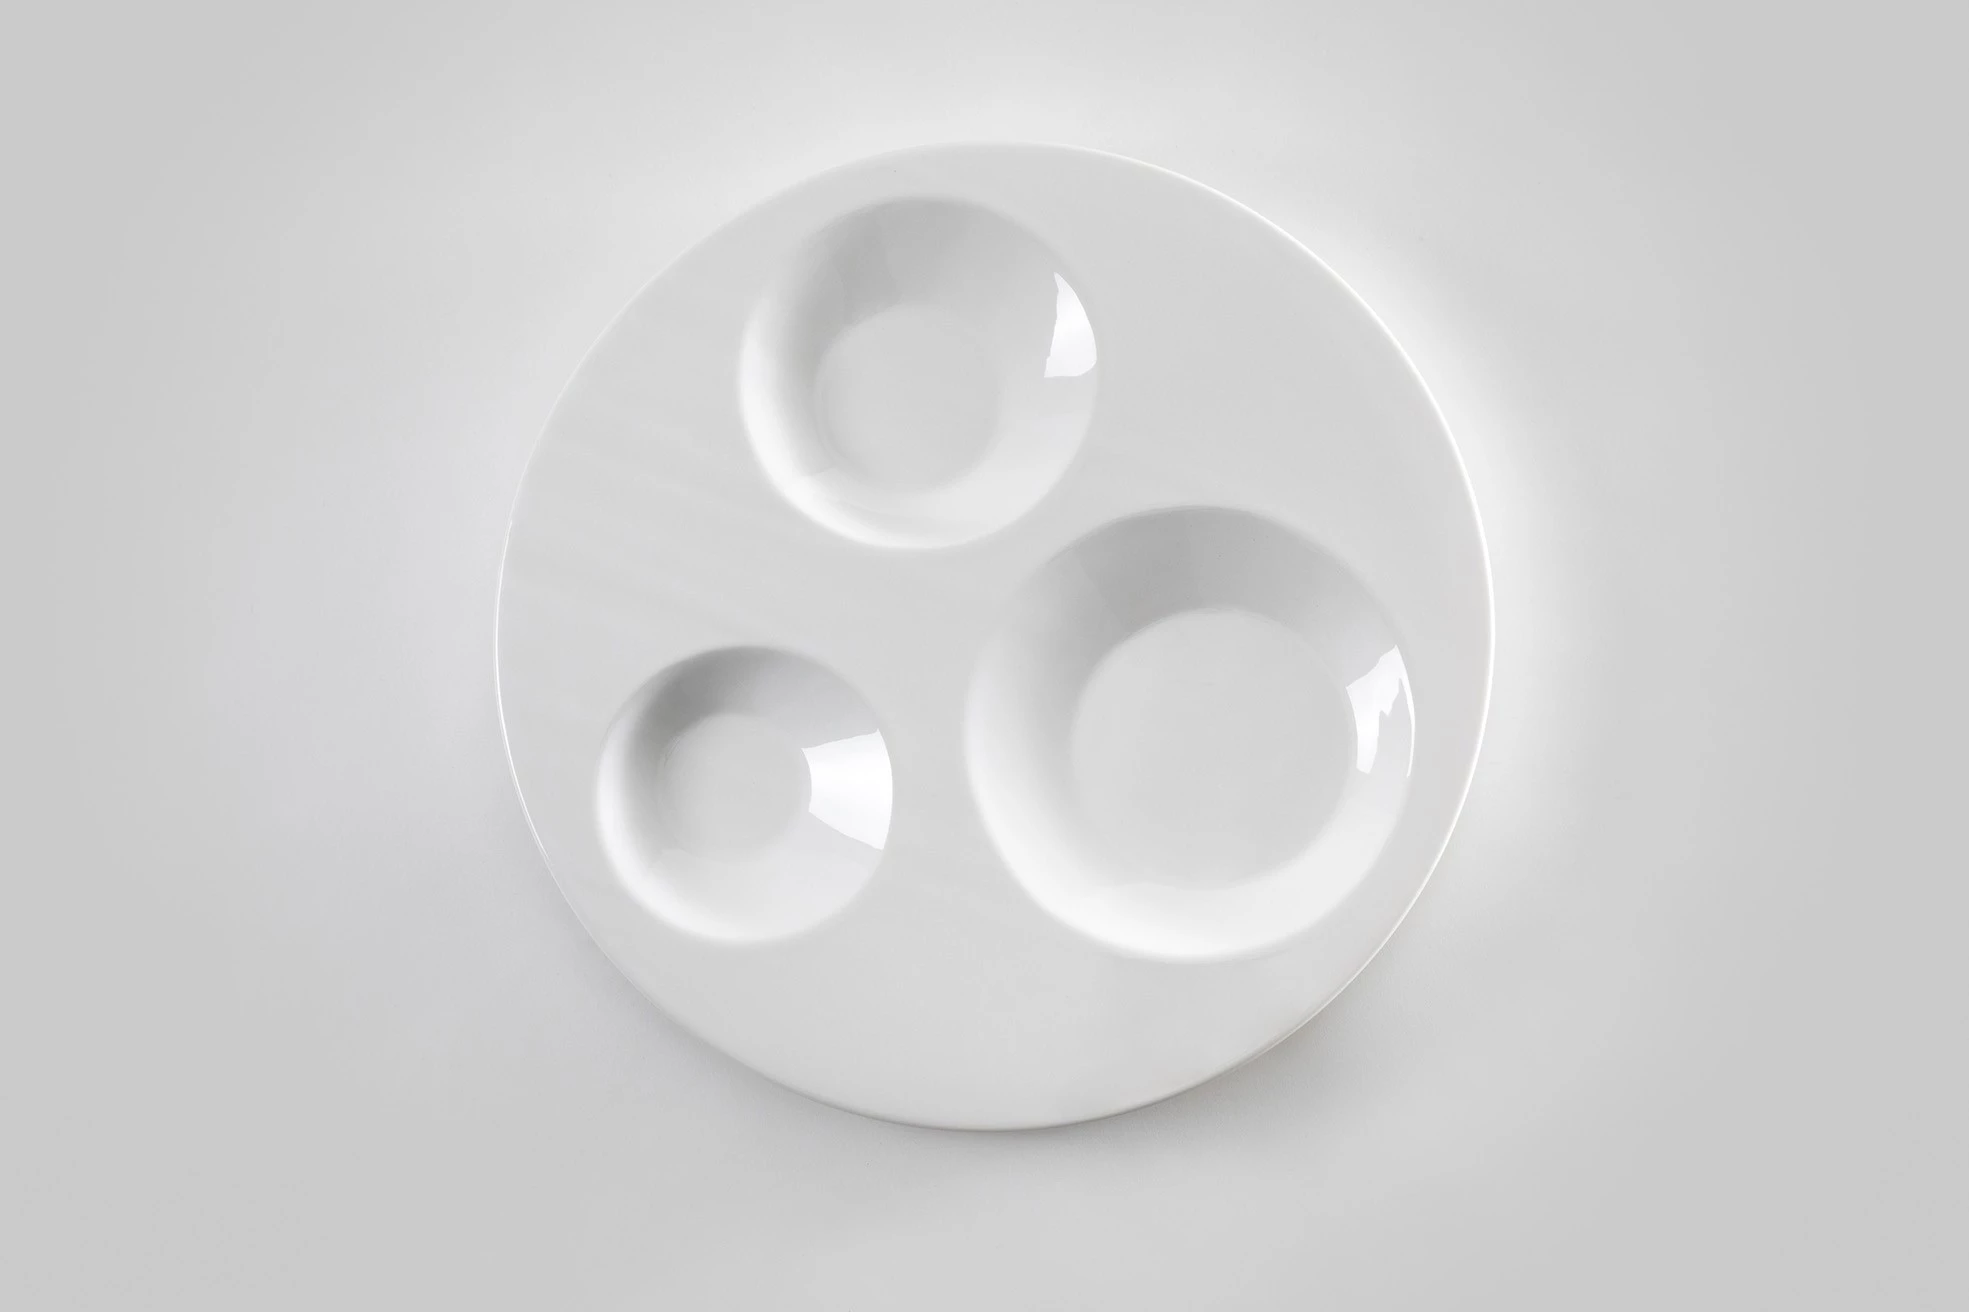 Big Round - Jasper Morrison - Object - Galerie kreo